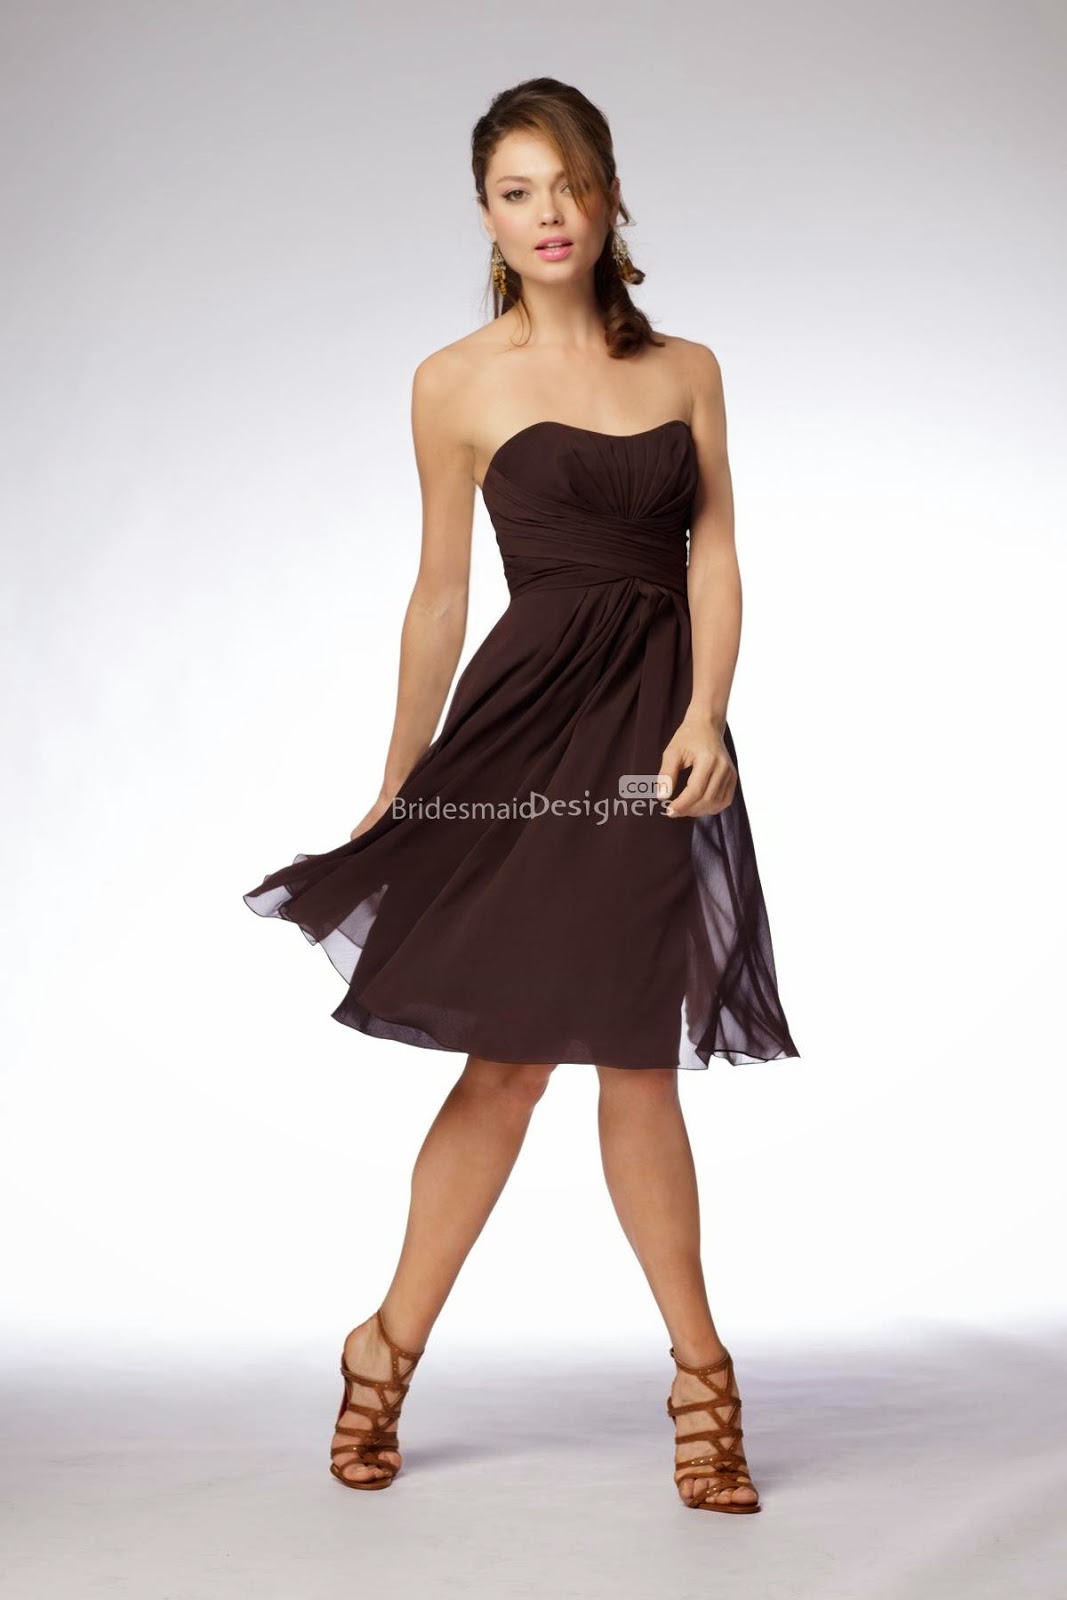 http://www.bridesmaiddesigners.com/plain-espresso-sleeveless-knee-length-empire-cross-ruched-chiffon-bridesmaid-dress-460.html